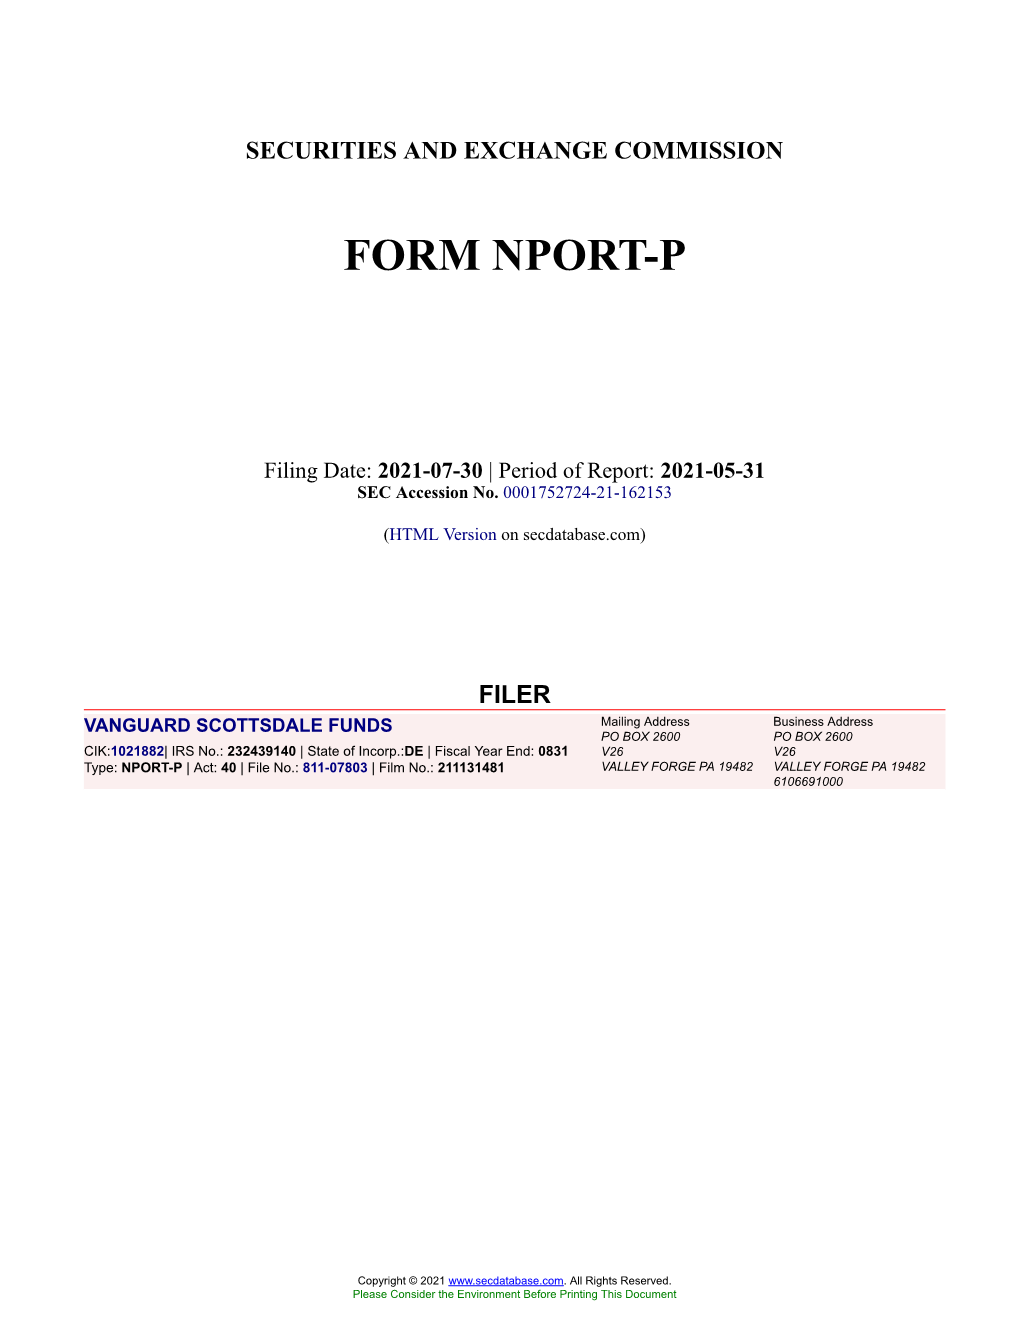 VANGUARD SCOTTSDALE FUNDS Form NPORT-P Filed 2021-07-30